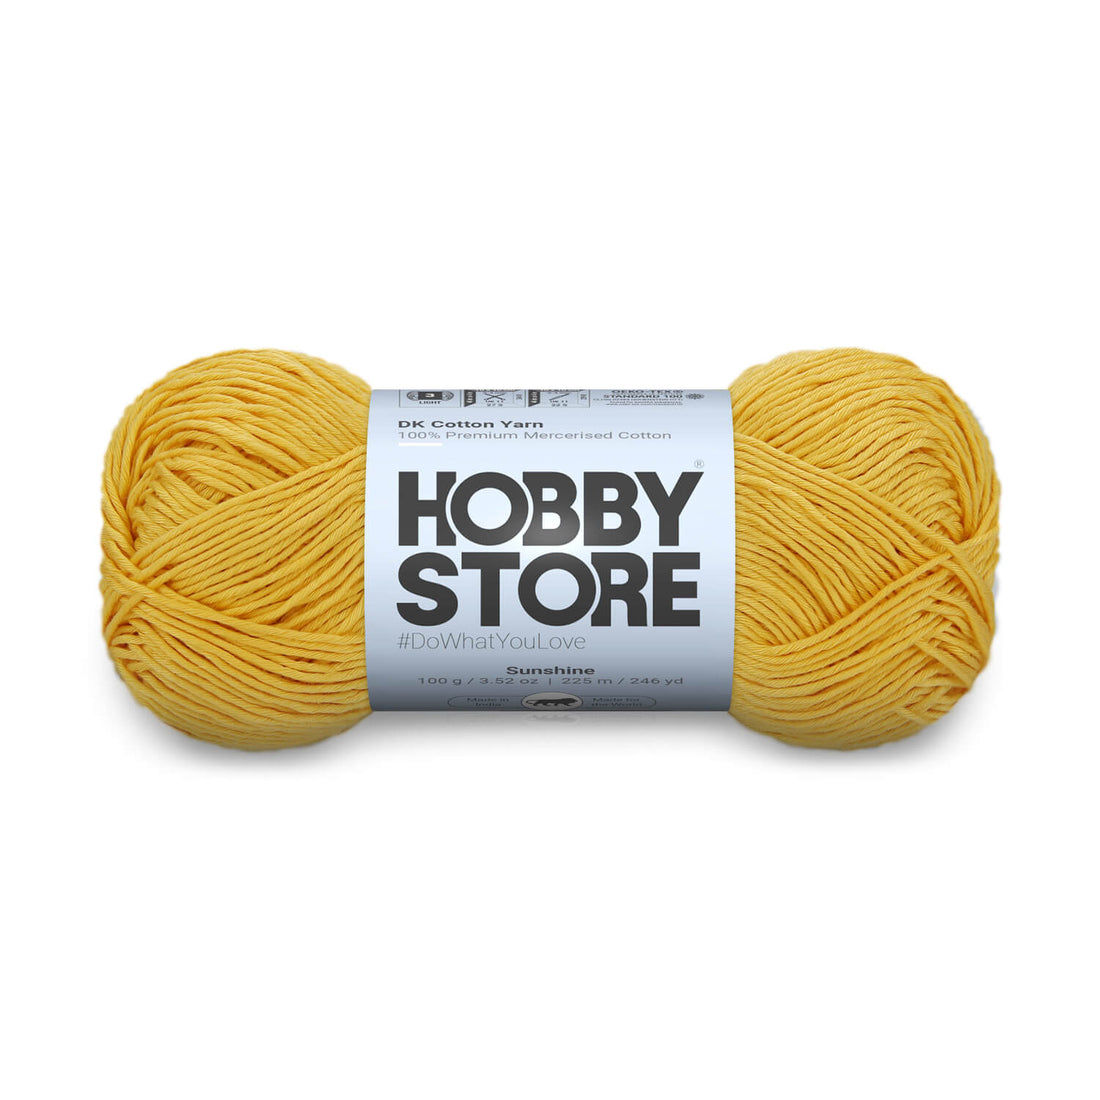 DK Mercerised Cotton Yarn by Hobby Store - Sunshine - 346